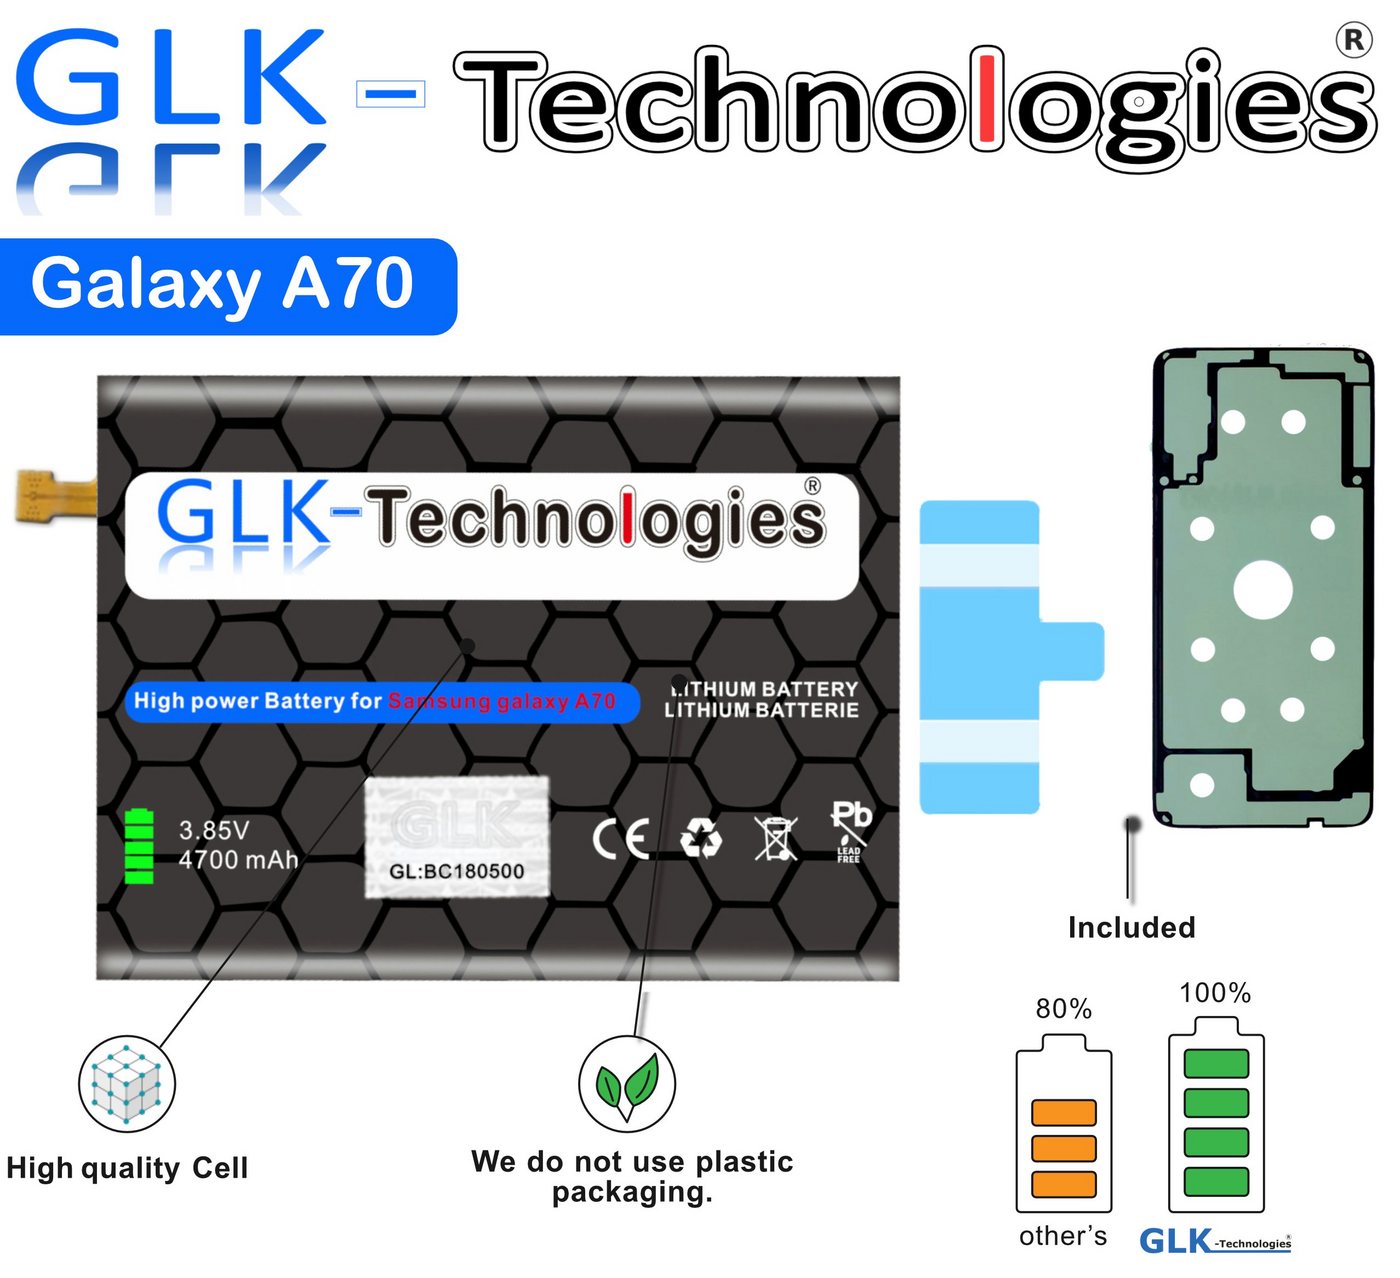 GLK-Technologies High Power Ersatzakku kompatibel mit Samsung Galaxy A70 SM-A705F / A70 SM-A705DS DUAL SIM, GLK-Technologies Battery, accu, 4700 mAh Akku, inkl. 2X Klebebandsätze Smartphone-Akku 4700 mAh (3.8 V) von GLK-Technologies